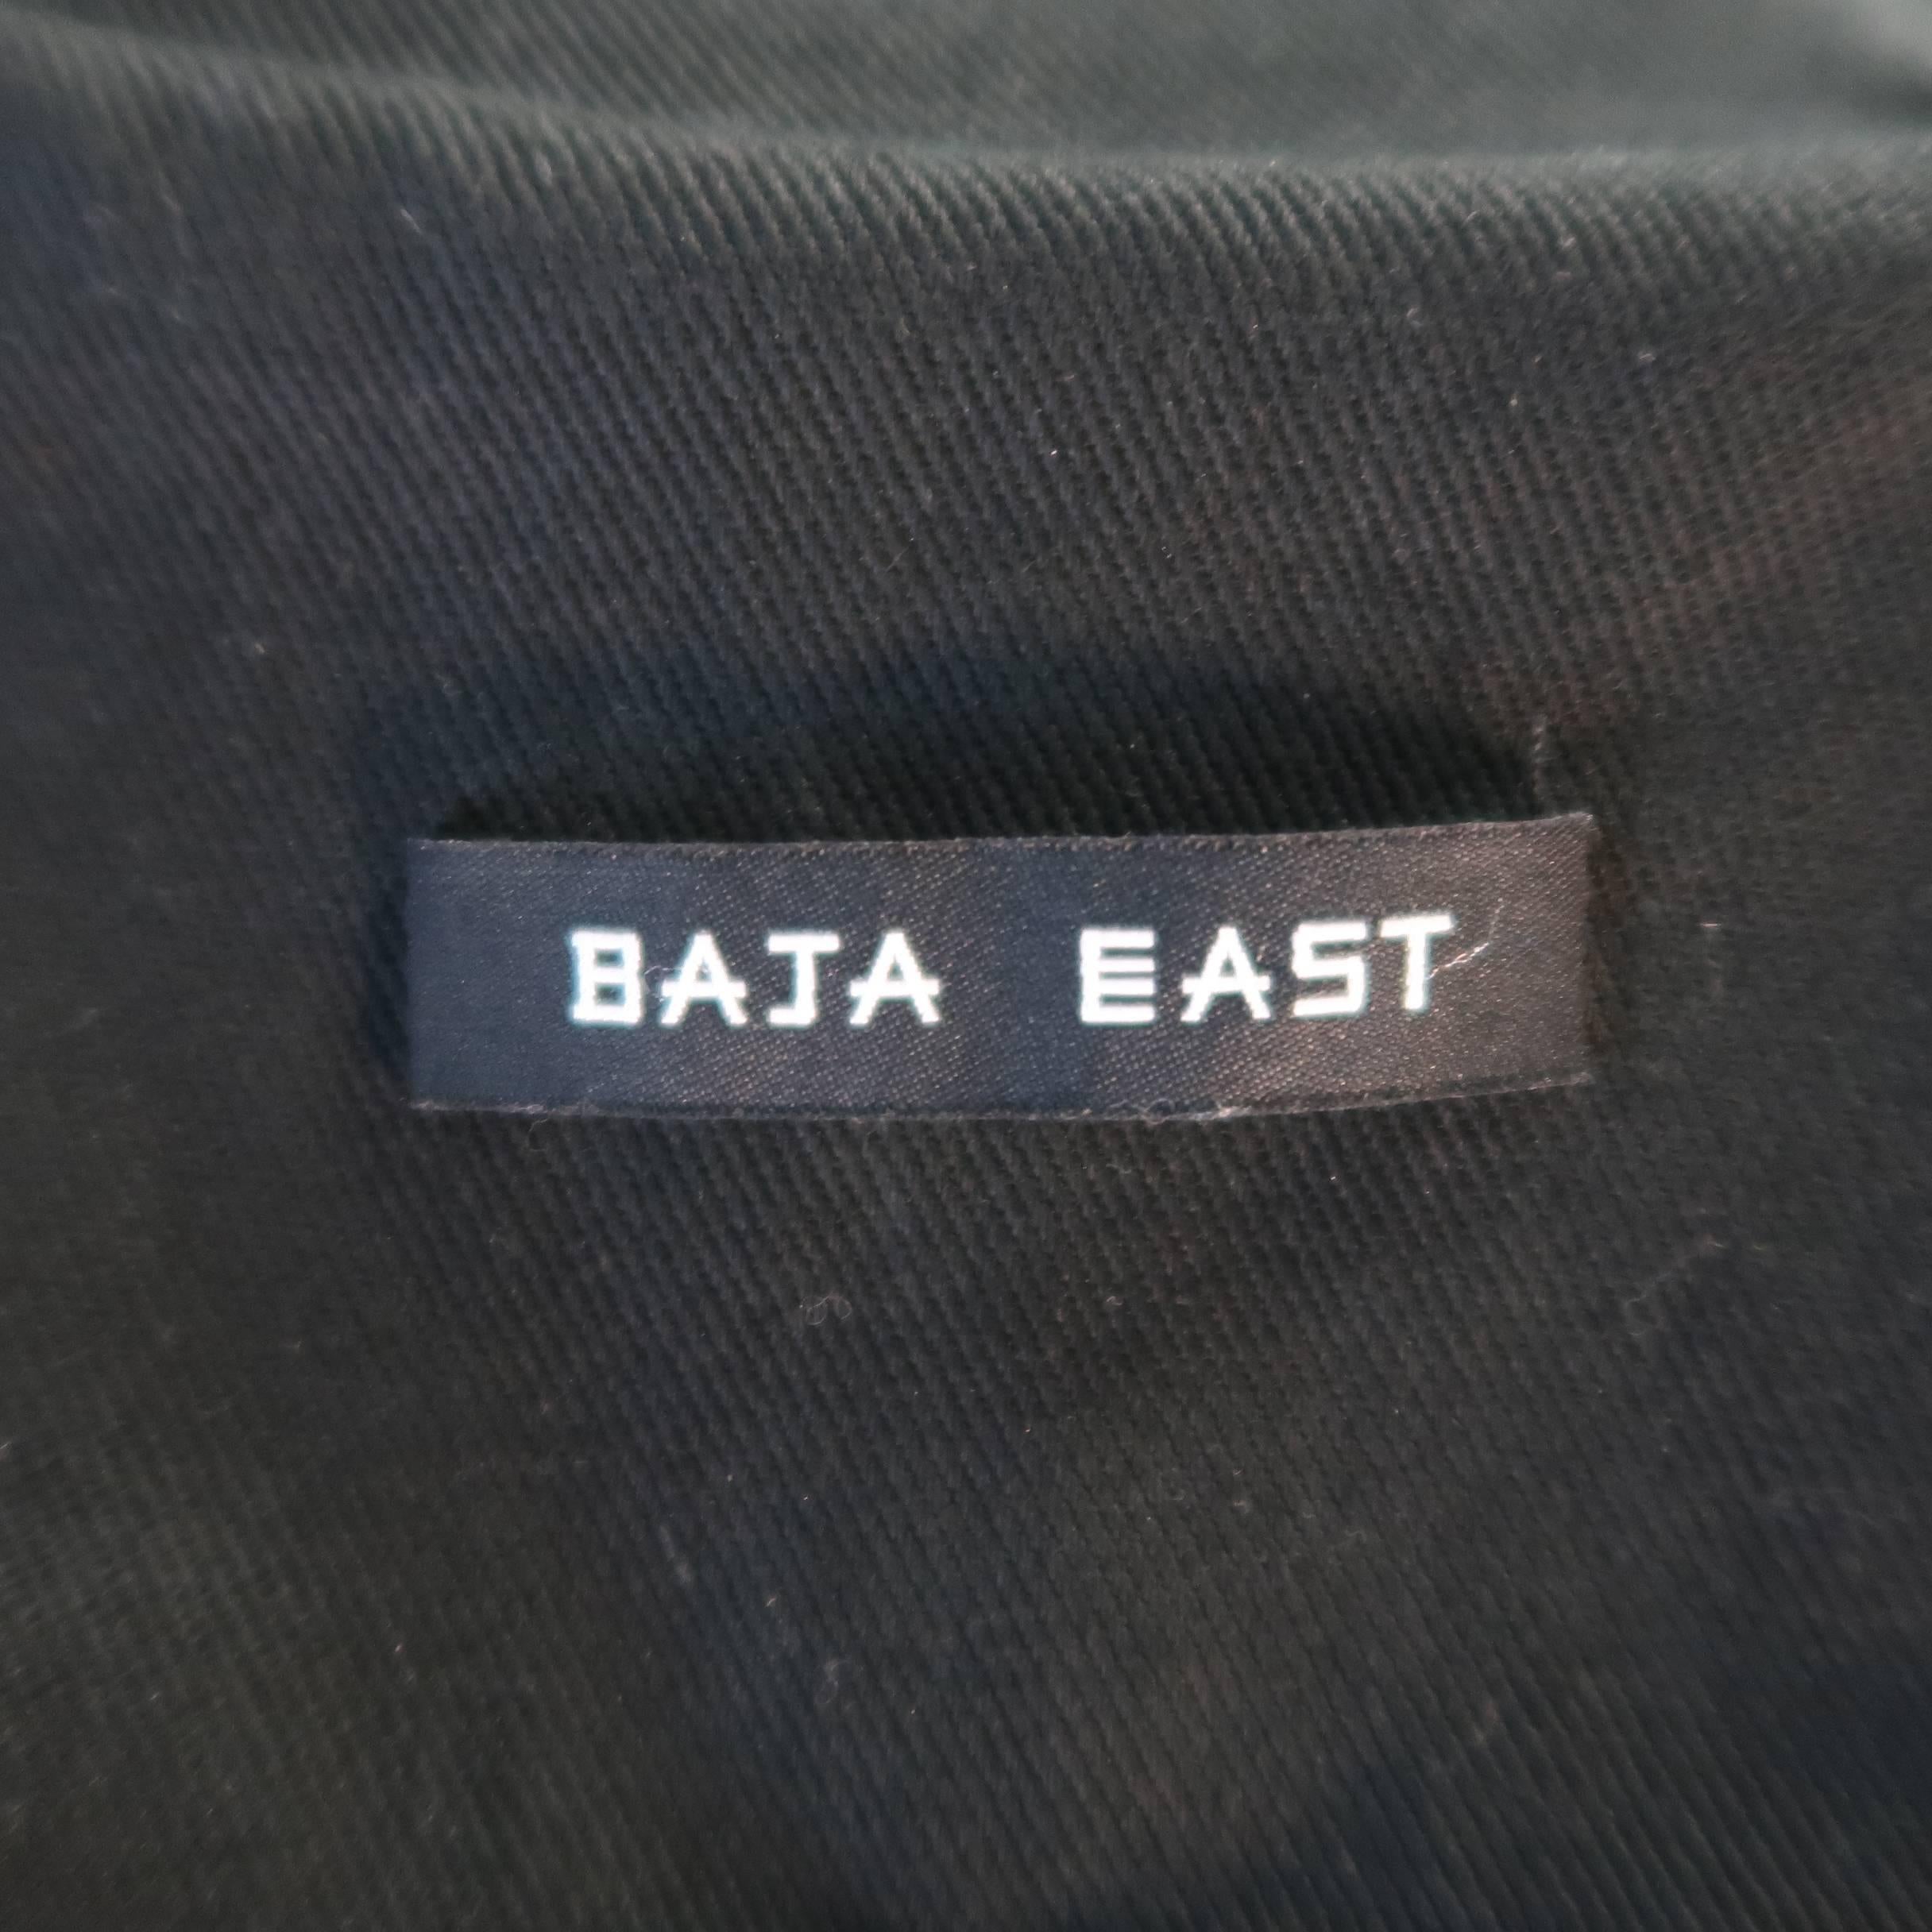 Baja East Jacket - Black Perforated Ponyhair Leather, Motorcycle Coat 3